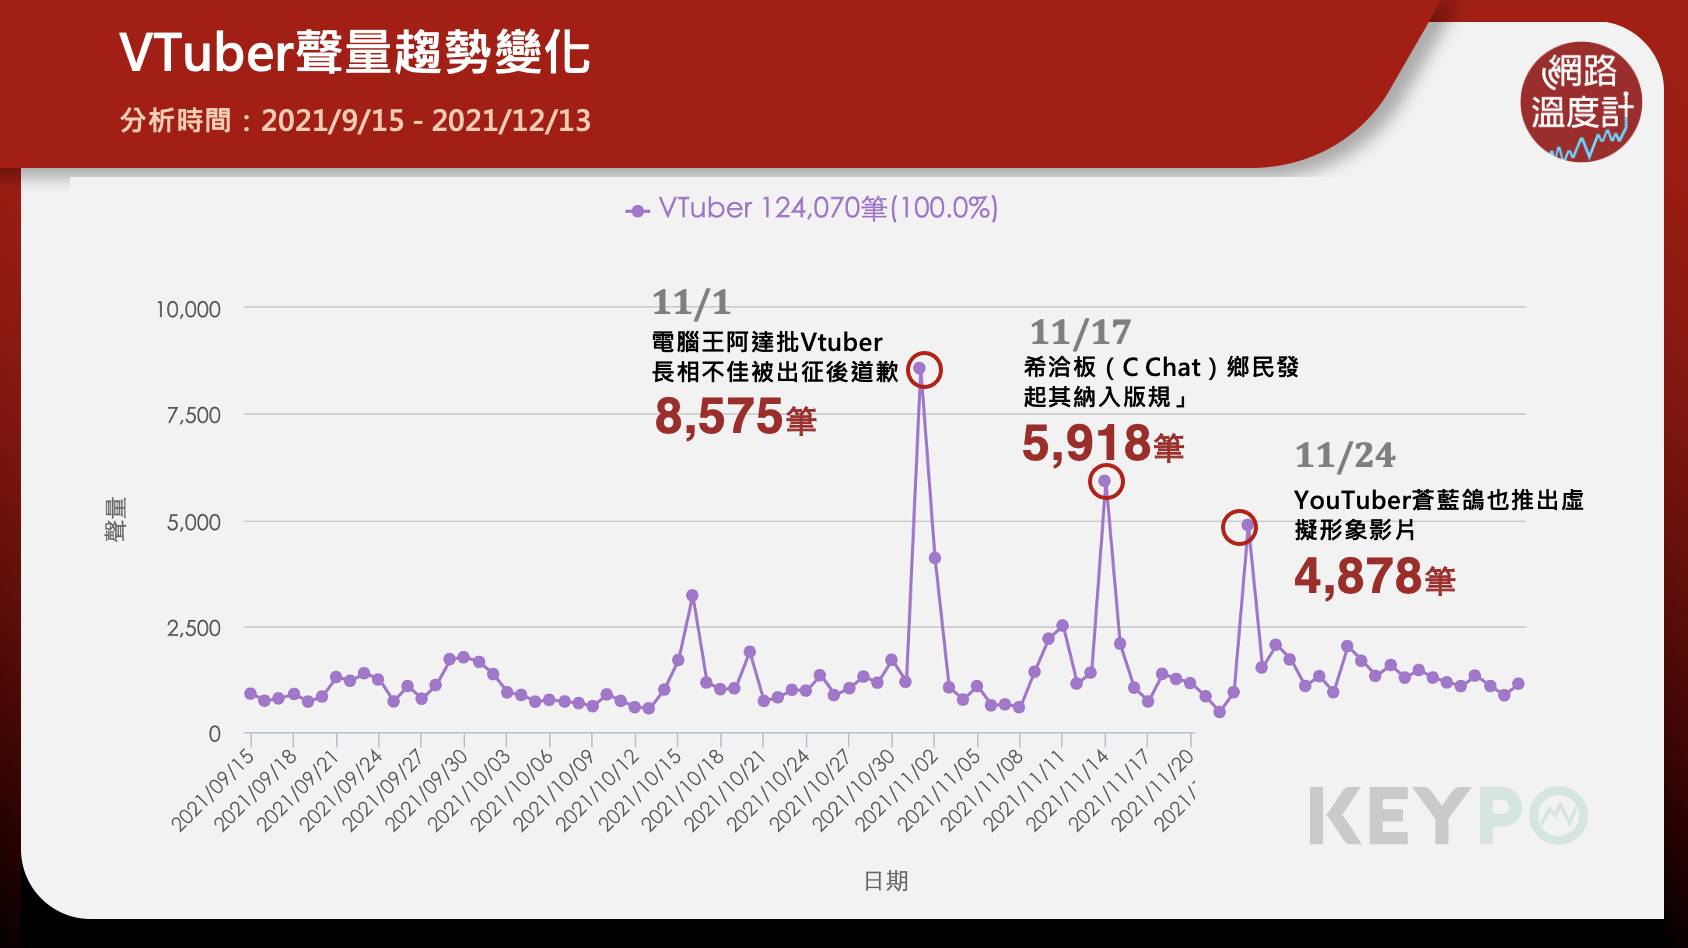 VTuber網路聲量近三個月破12萬筆，電腦王阿達評論被炎上、PTT網友敲碗納入新版規成為討論高峰。